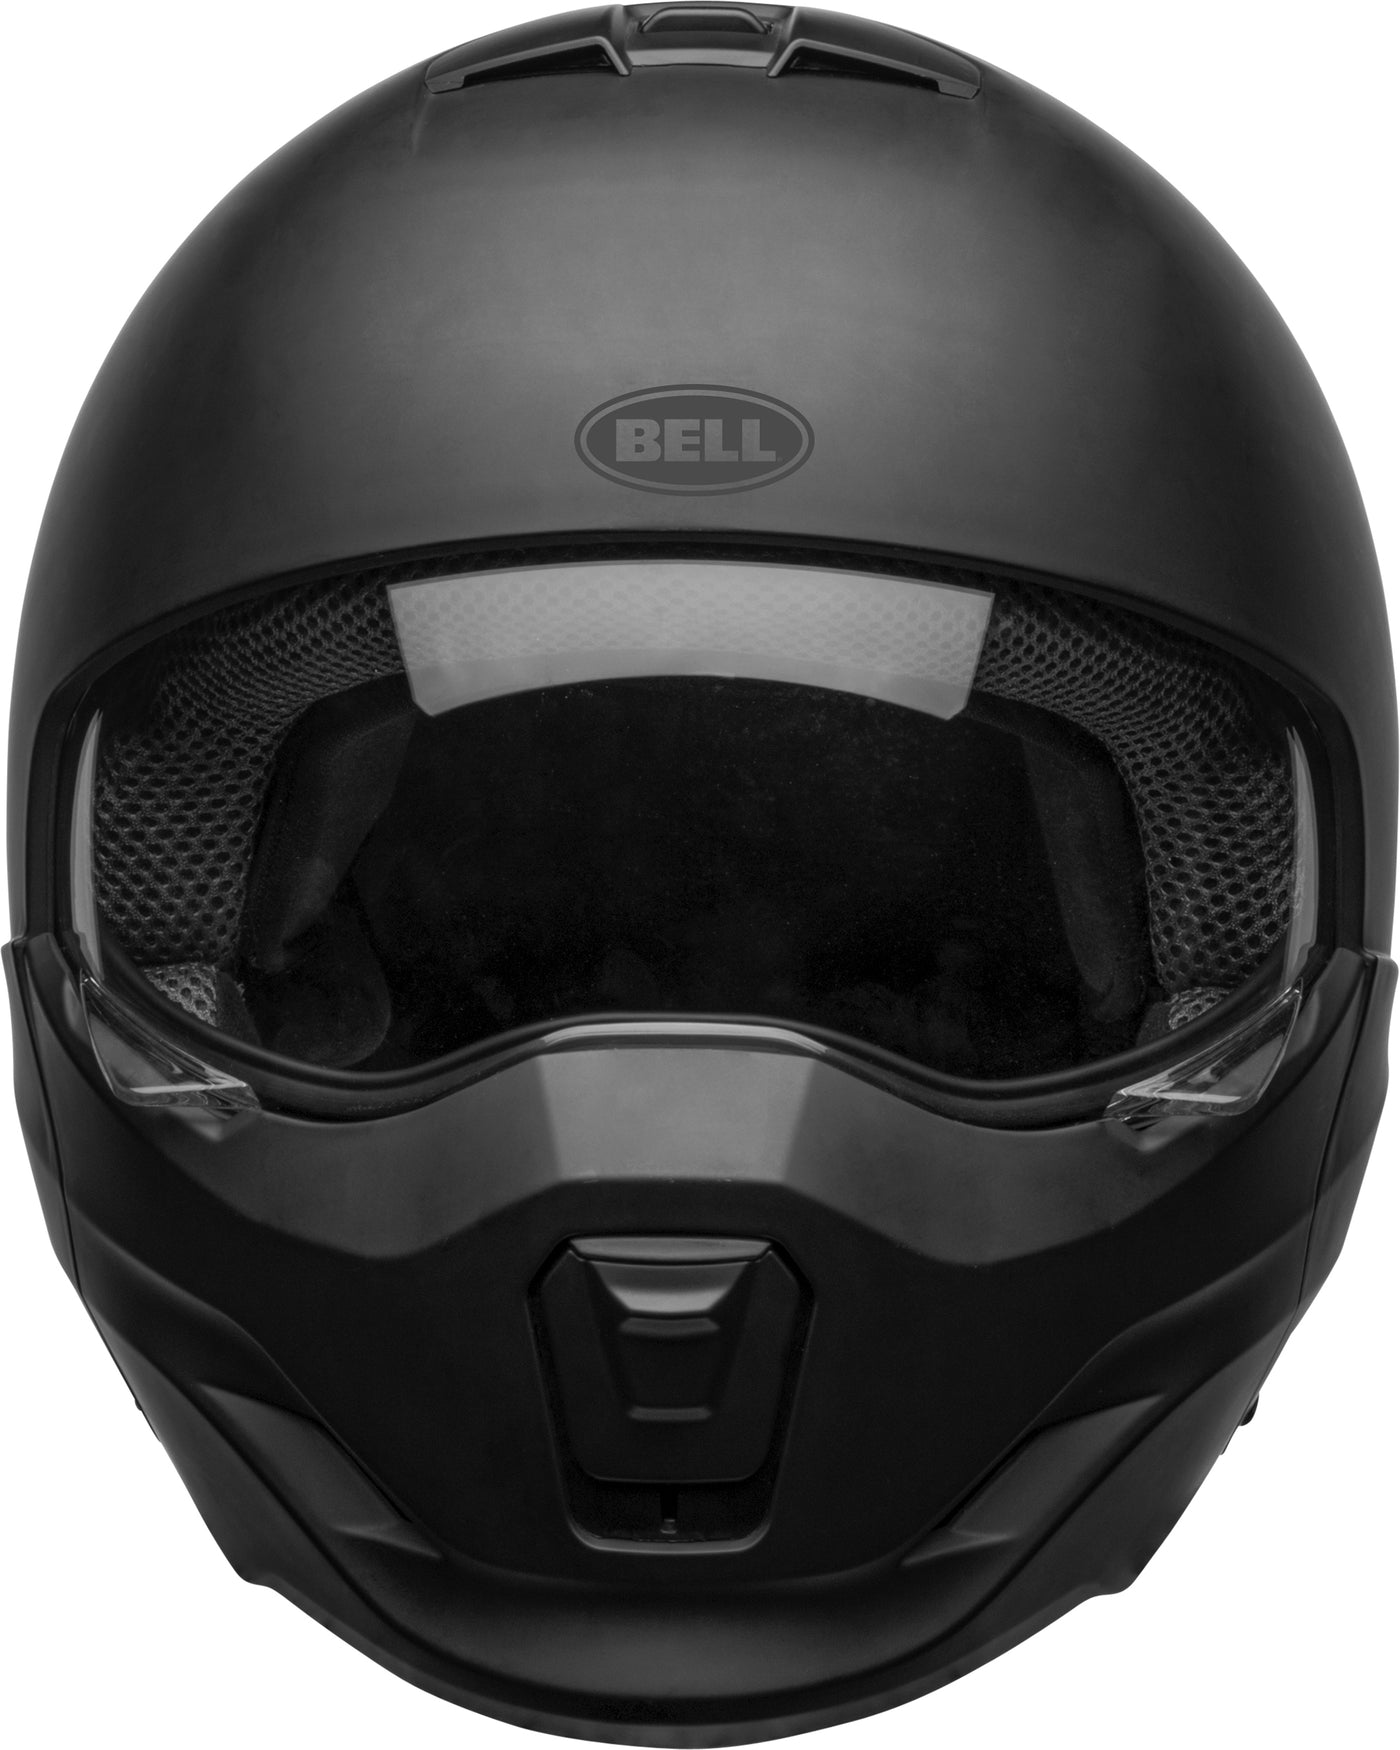 Bell Helmets Broozer - Matte Black